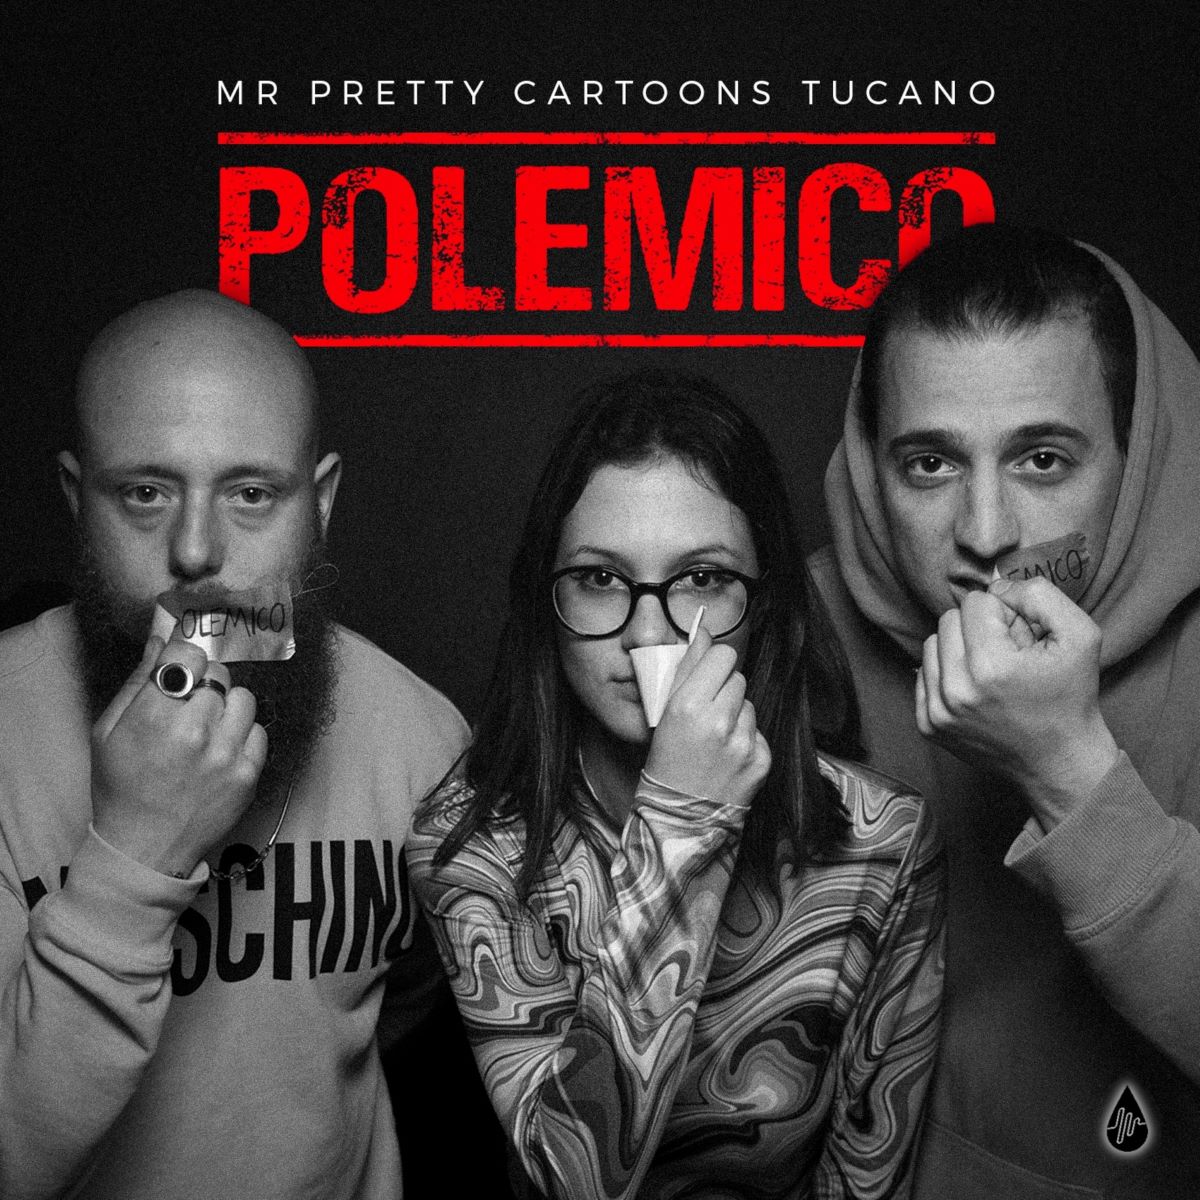 Mr. Pretty & Tucano & Cartoons – “Polemico”